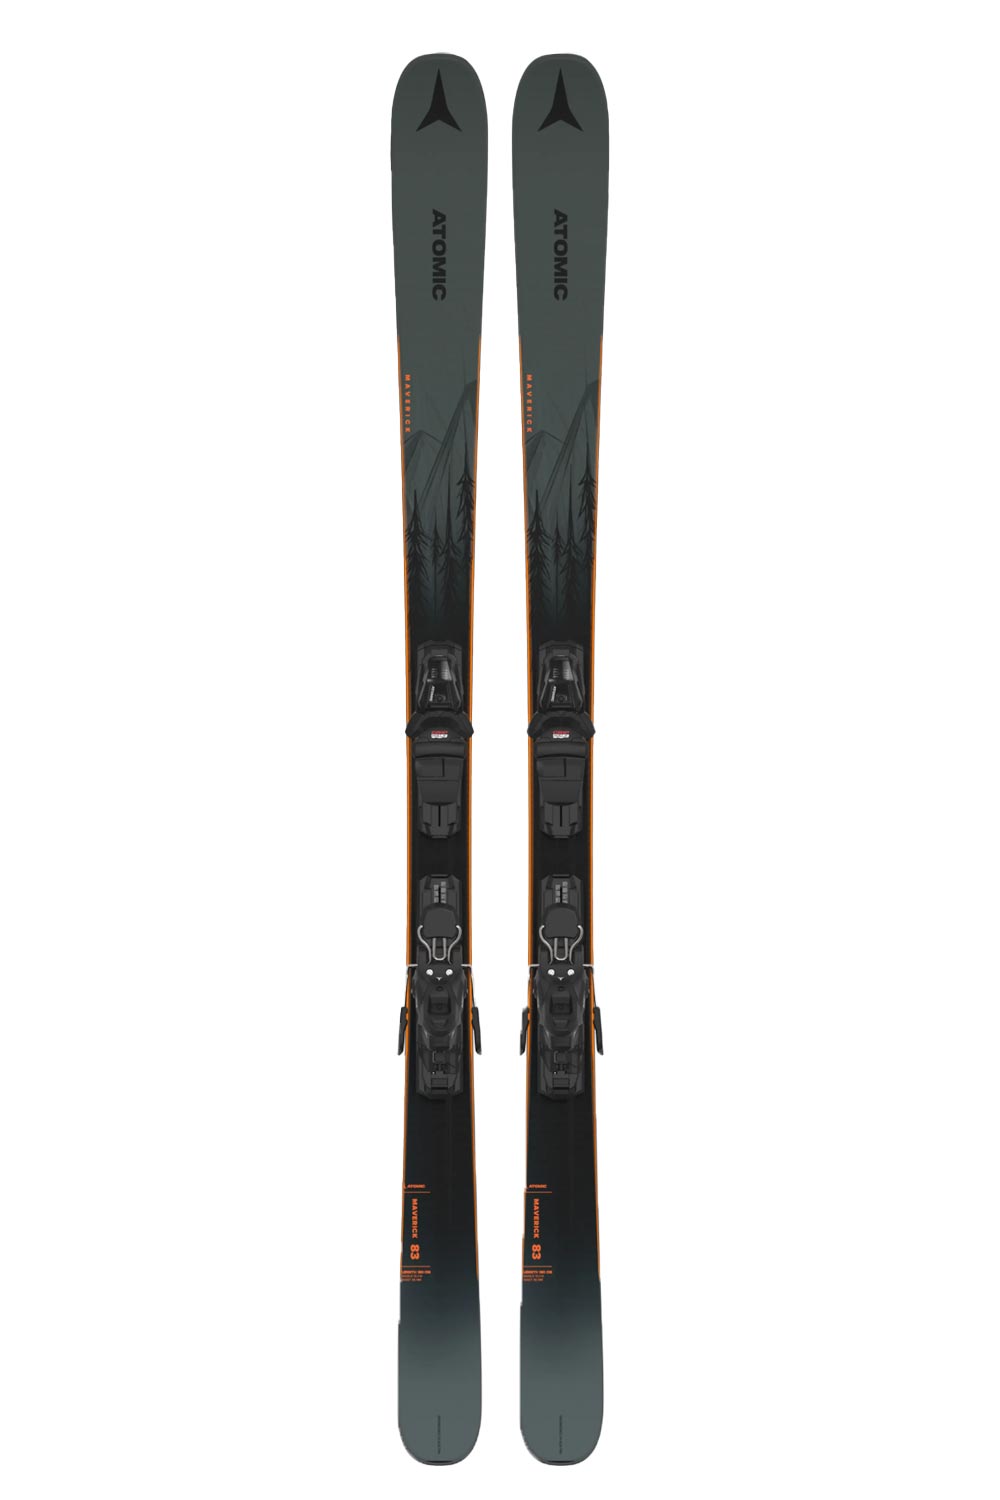 Atomic Maverick 83 + M 10 GW System Skis - Men's - 23-24